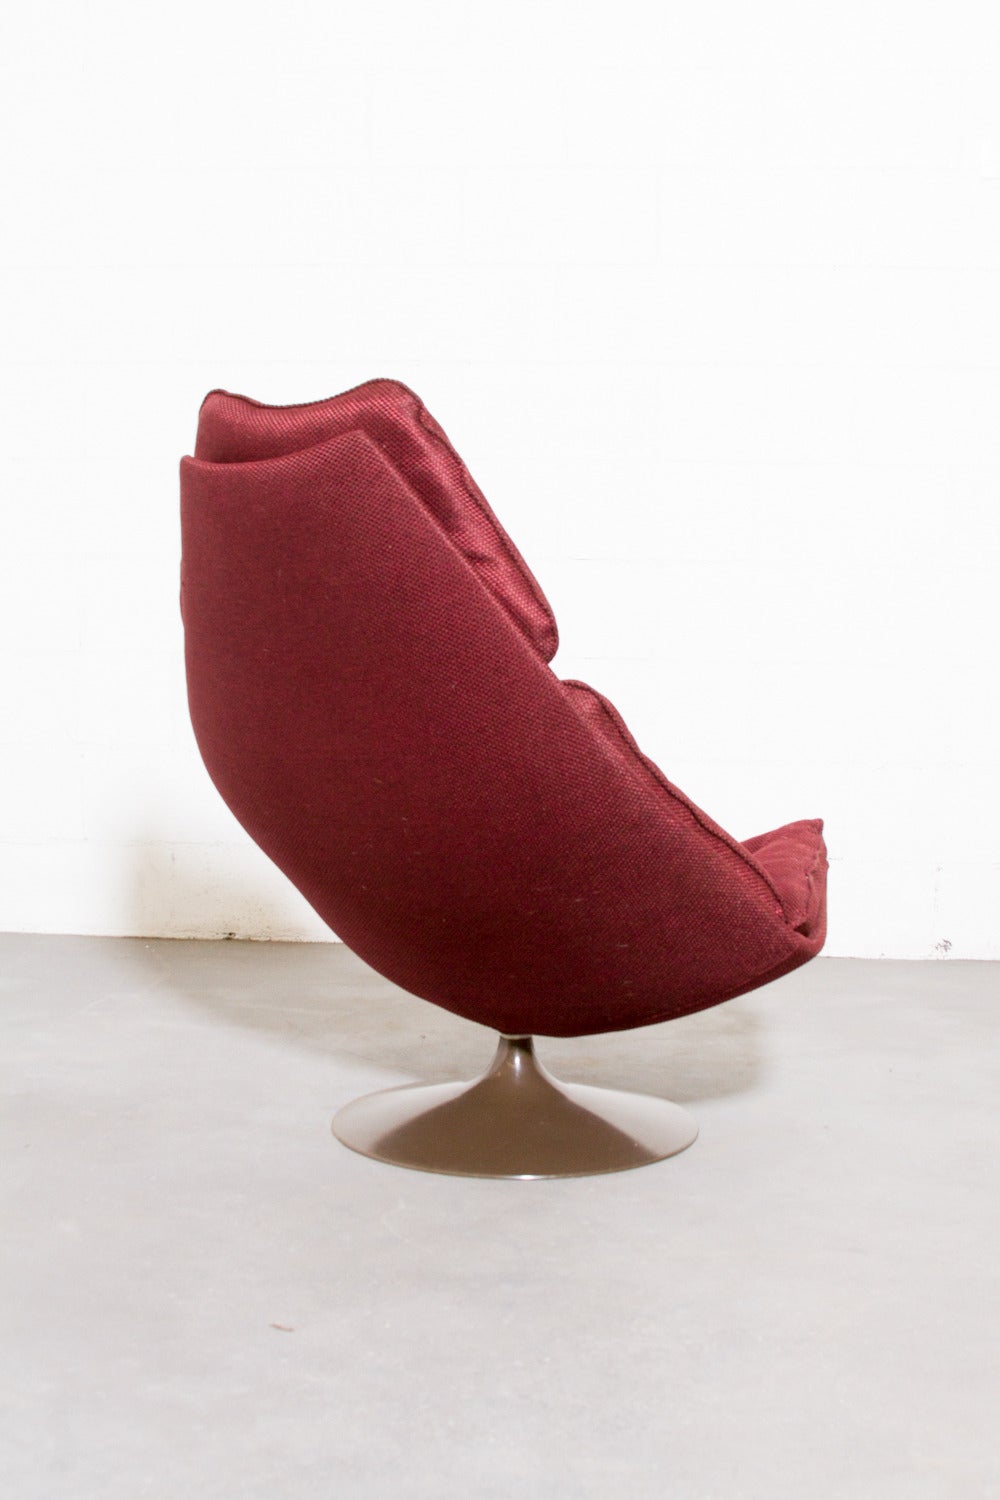 Dutch Geoffrey Harcourt F584 Swivel Lounge Chair for Artifort